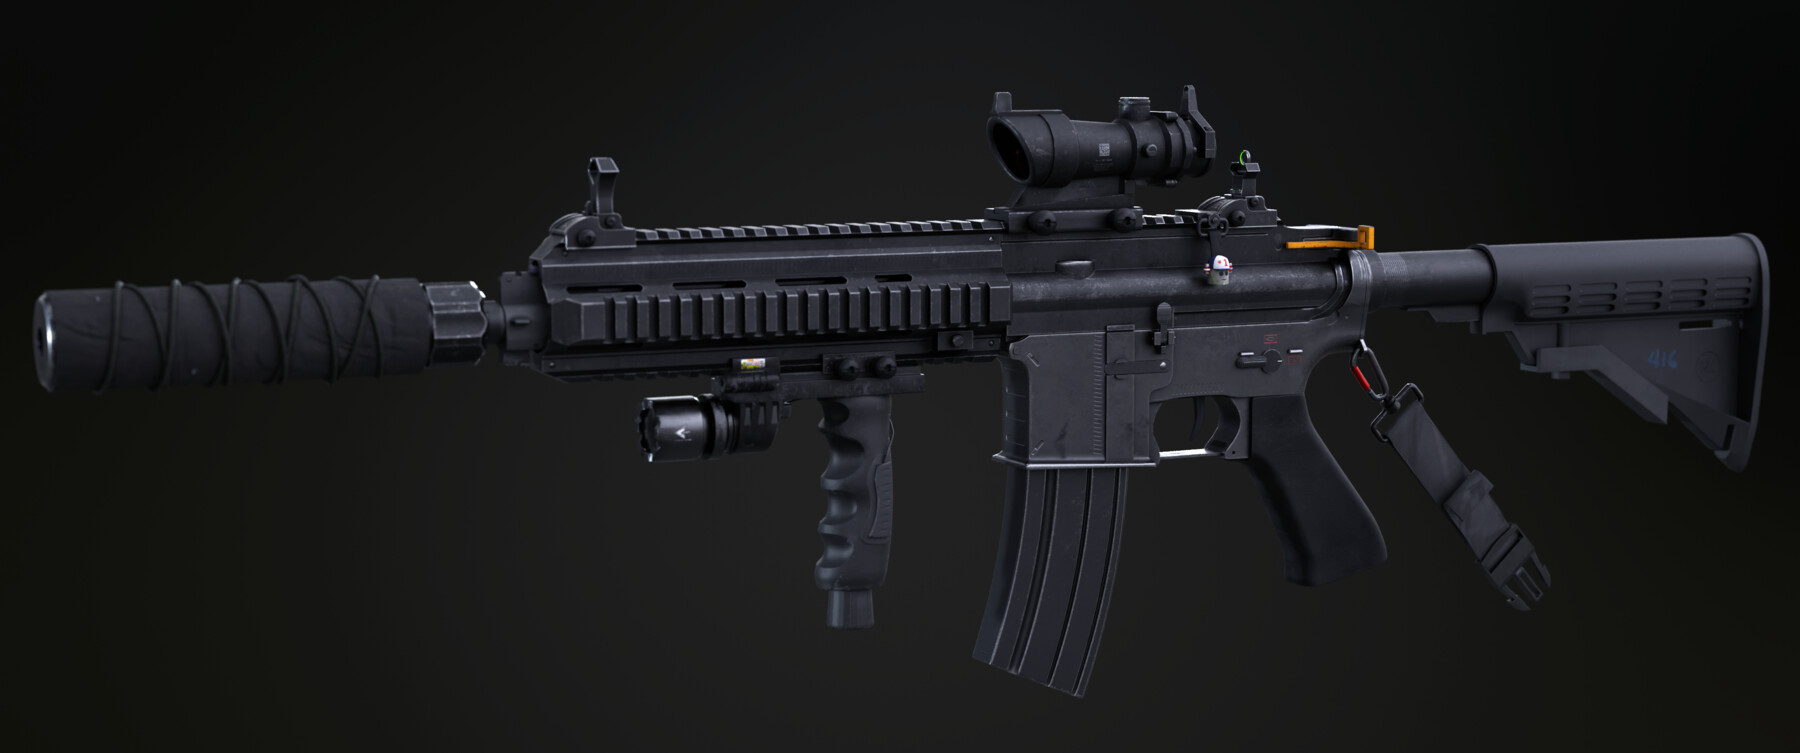 HK416 attachment pack - AKI Mods Workshop